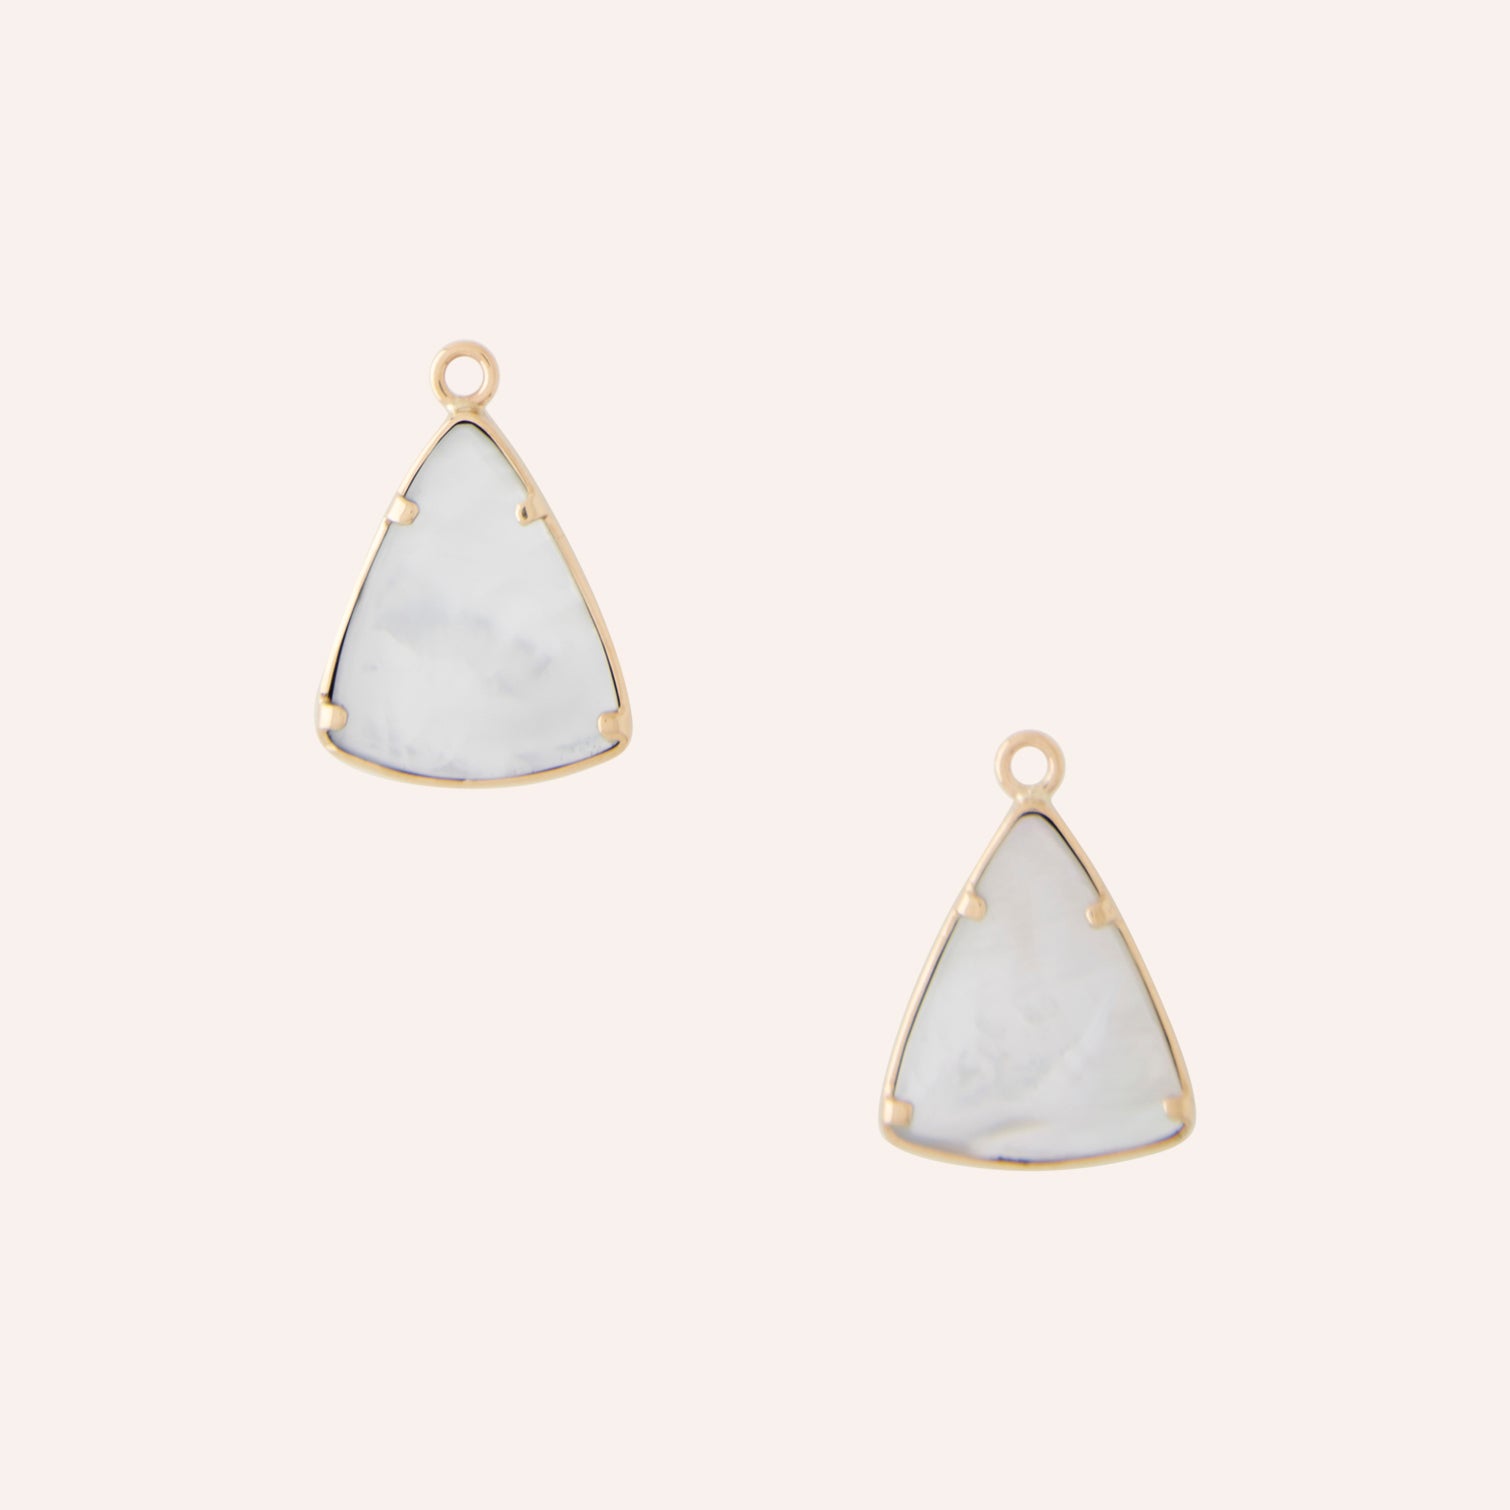 Azurite Triangle Earring Drops